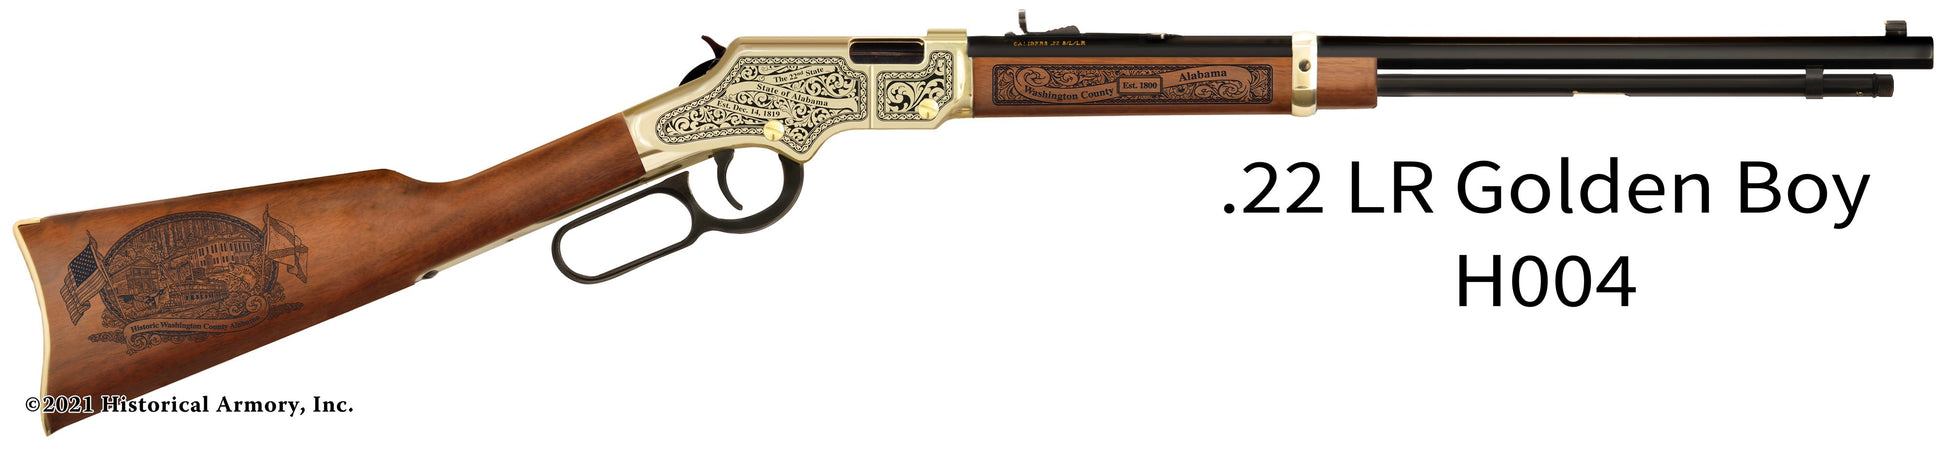 Washington County Alabama History Engraved  Rifle Henry Golden Boy .22 | Historical Armory